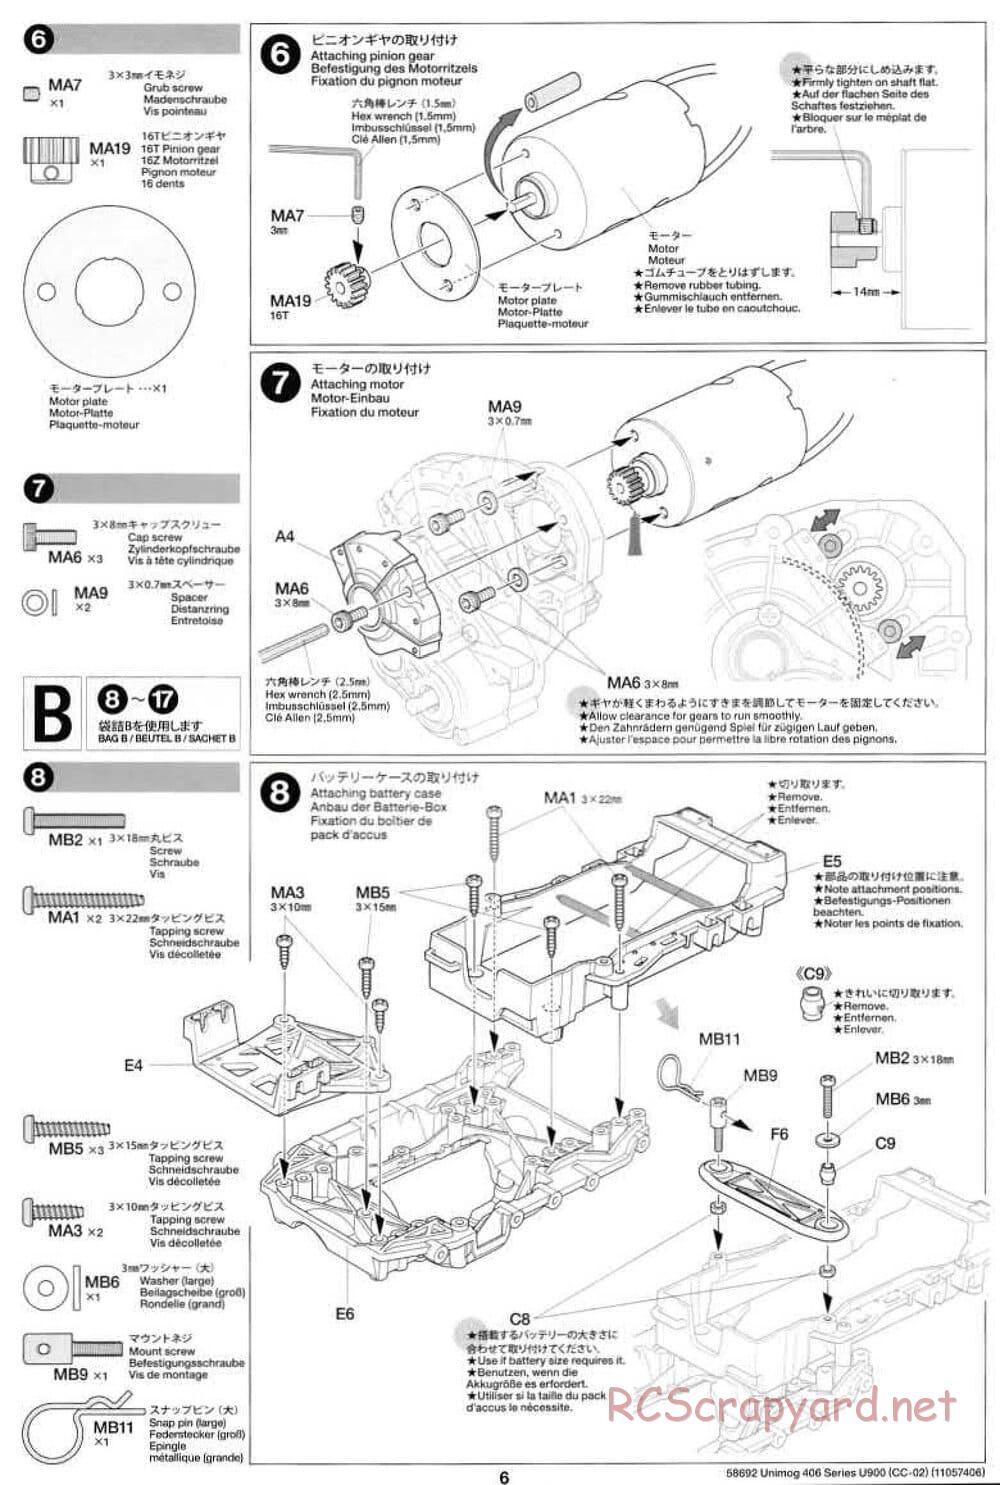 Tamiya - Mercedes-Benz Unimog 406 Series U900 - CC-02 Chassis - Manual - Page 6